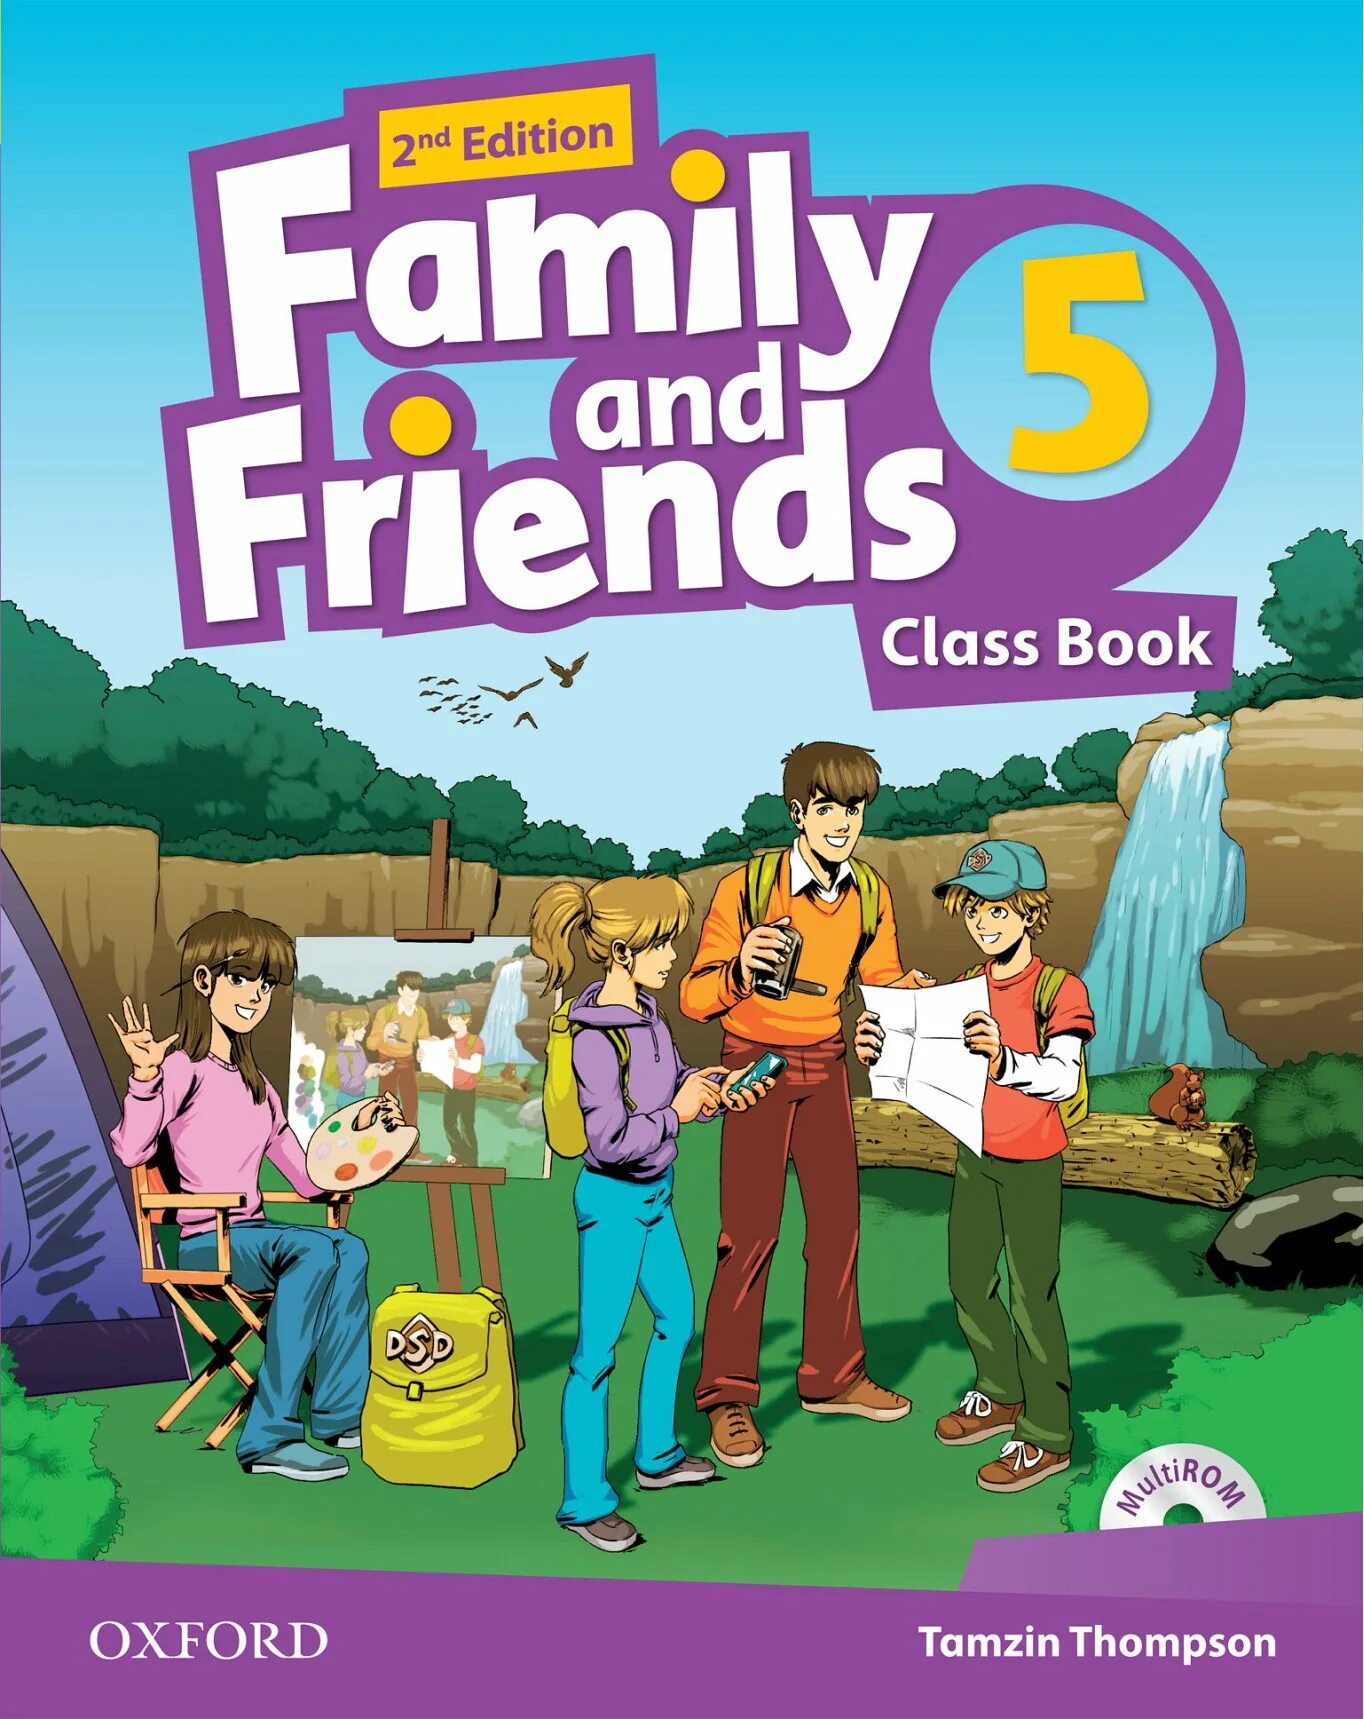 Учебник Family and friends 5. Фэмили френдс 6. \Фэмили энд френдс 2 издание. Family and friends 3 2nd Edition. Students book 2 класс ответы